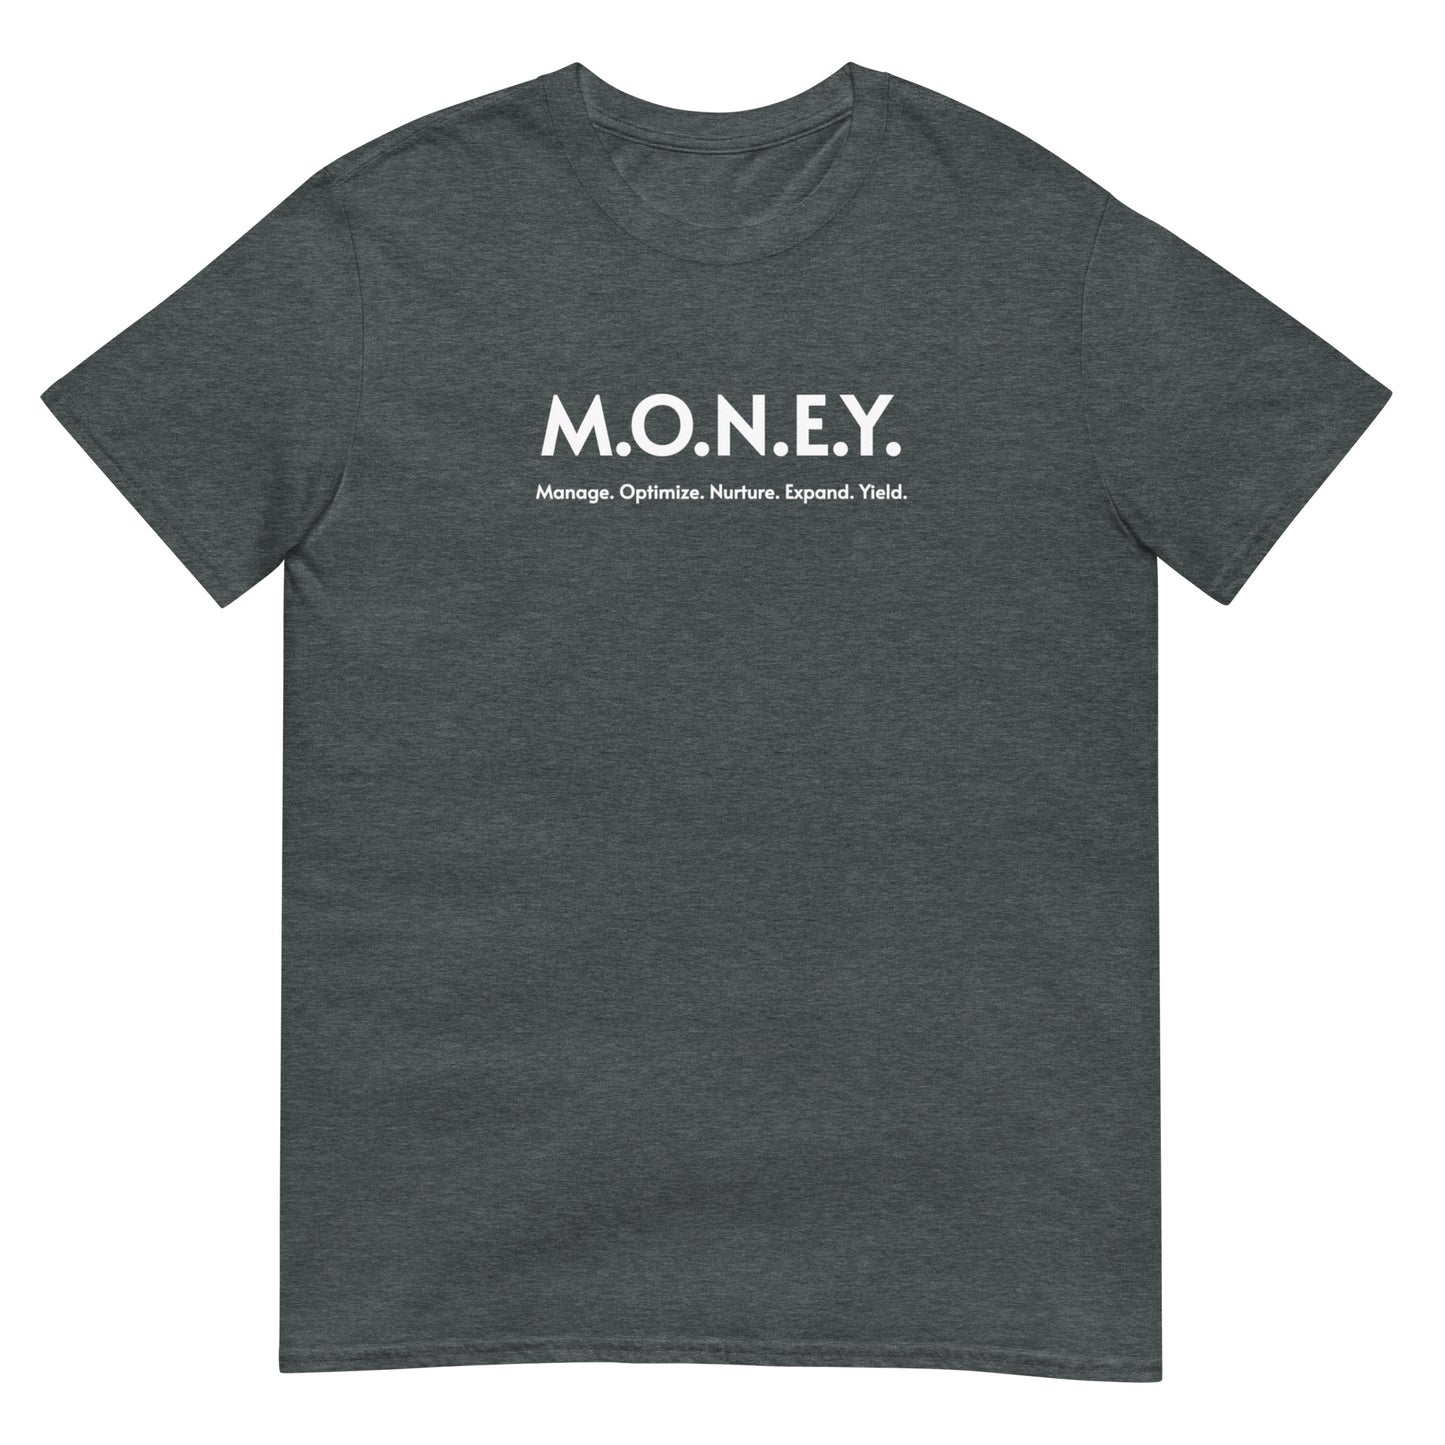 M.O.N.E.Y. Unisex T-Shirt